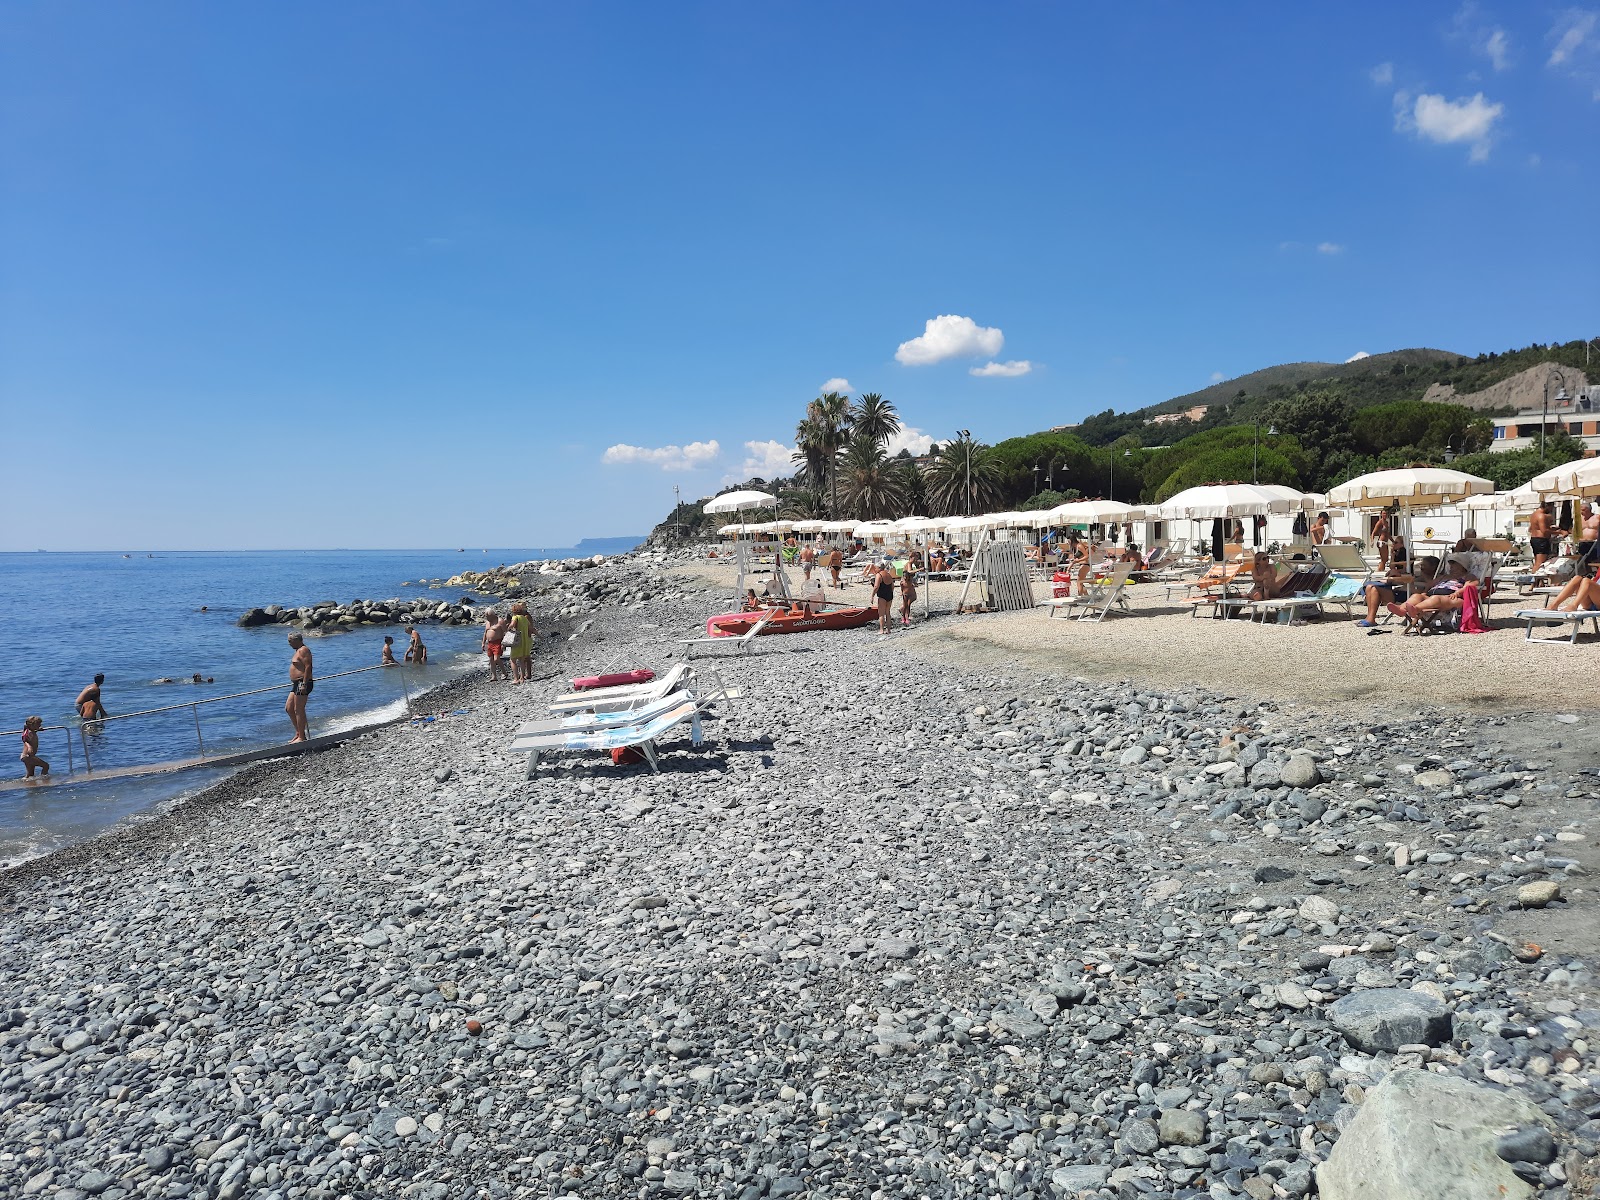 Foto von Spiaggia Libera Carretta Cogoleto mit grauer sand&kies Oberfläche